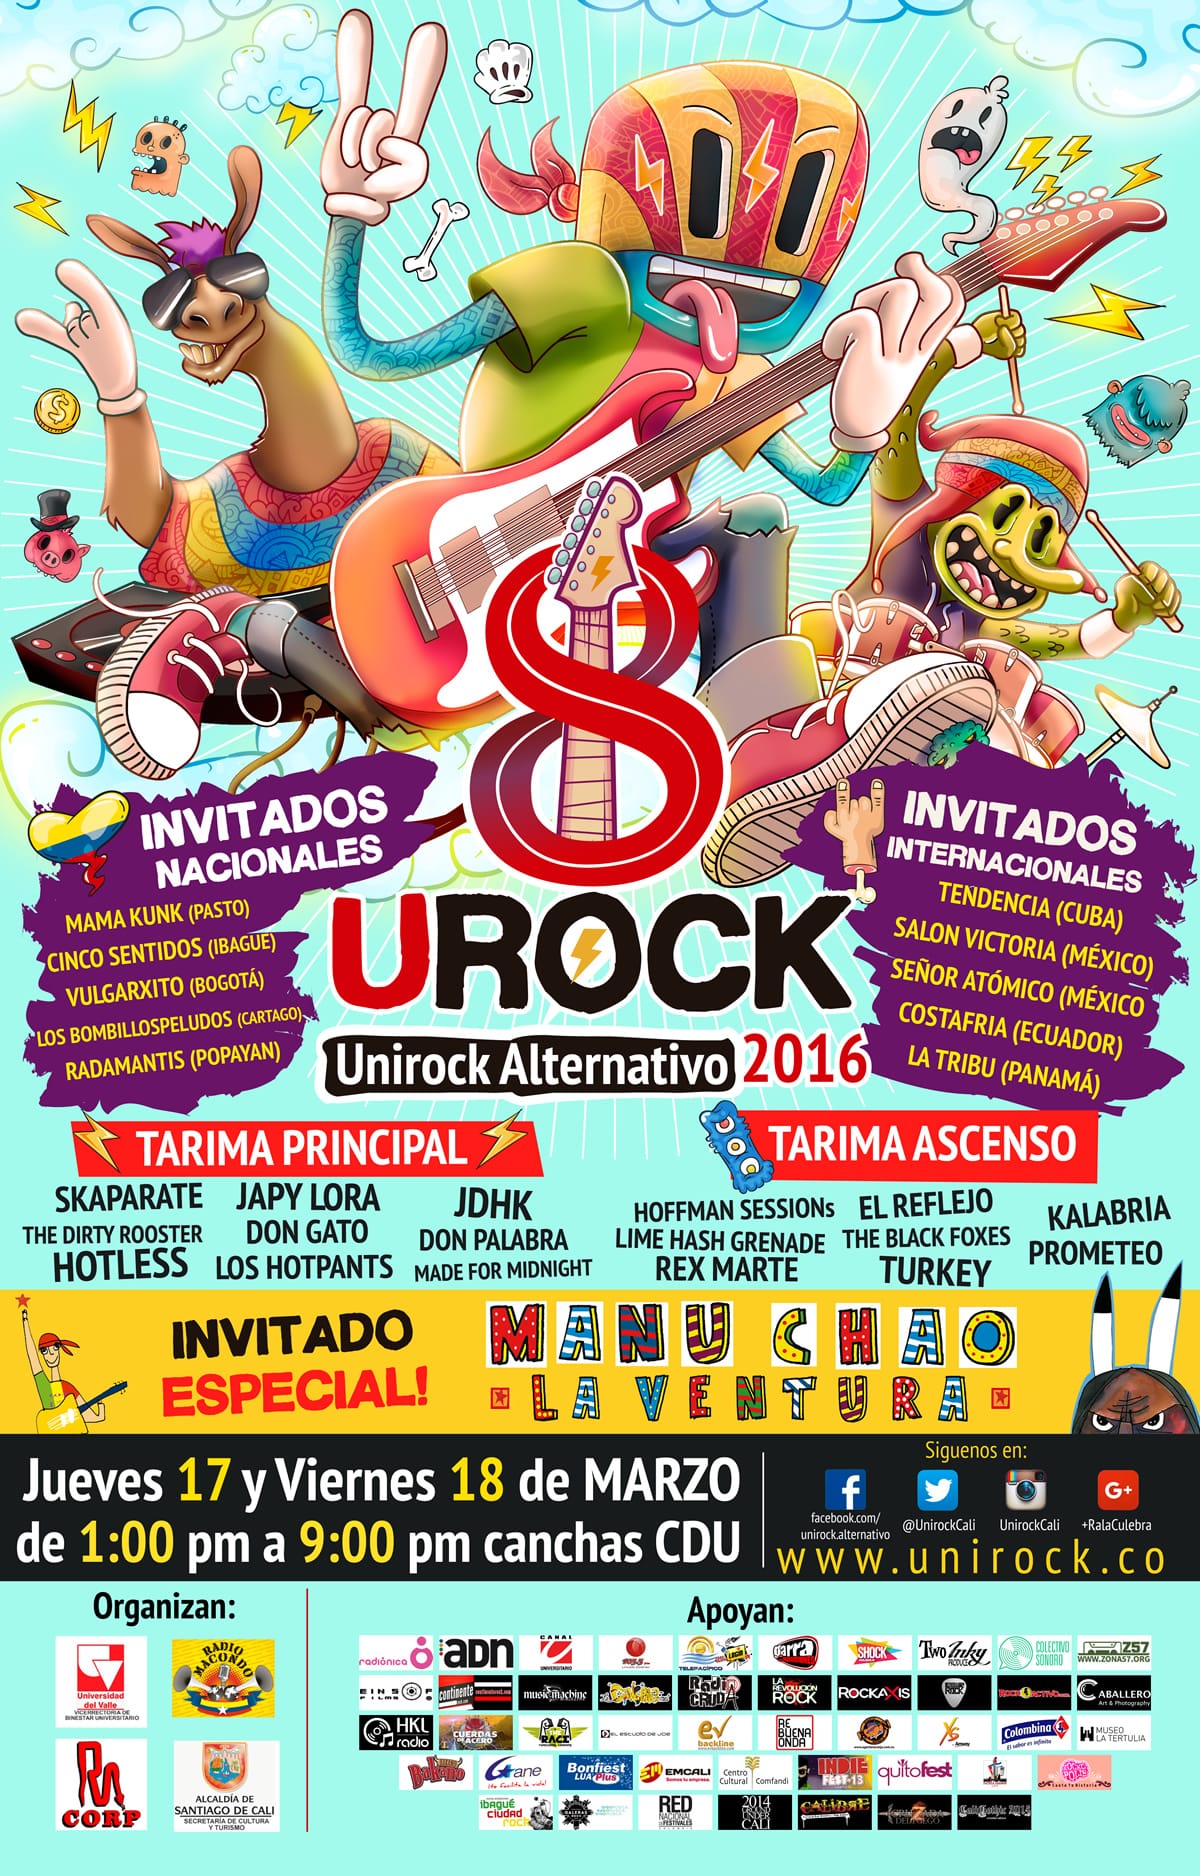 unirock2016